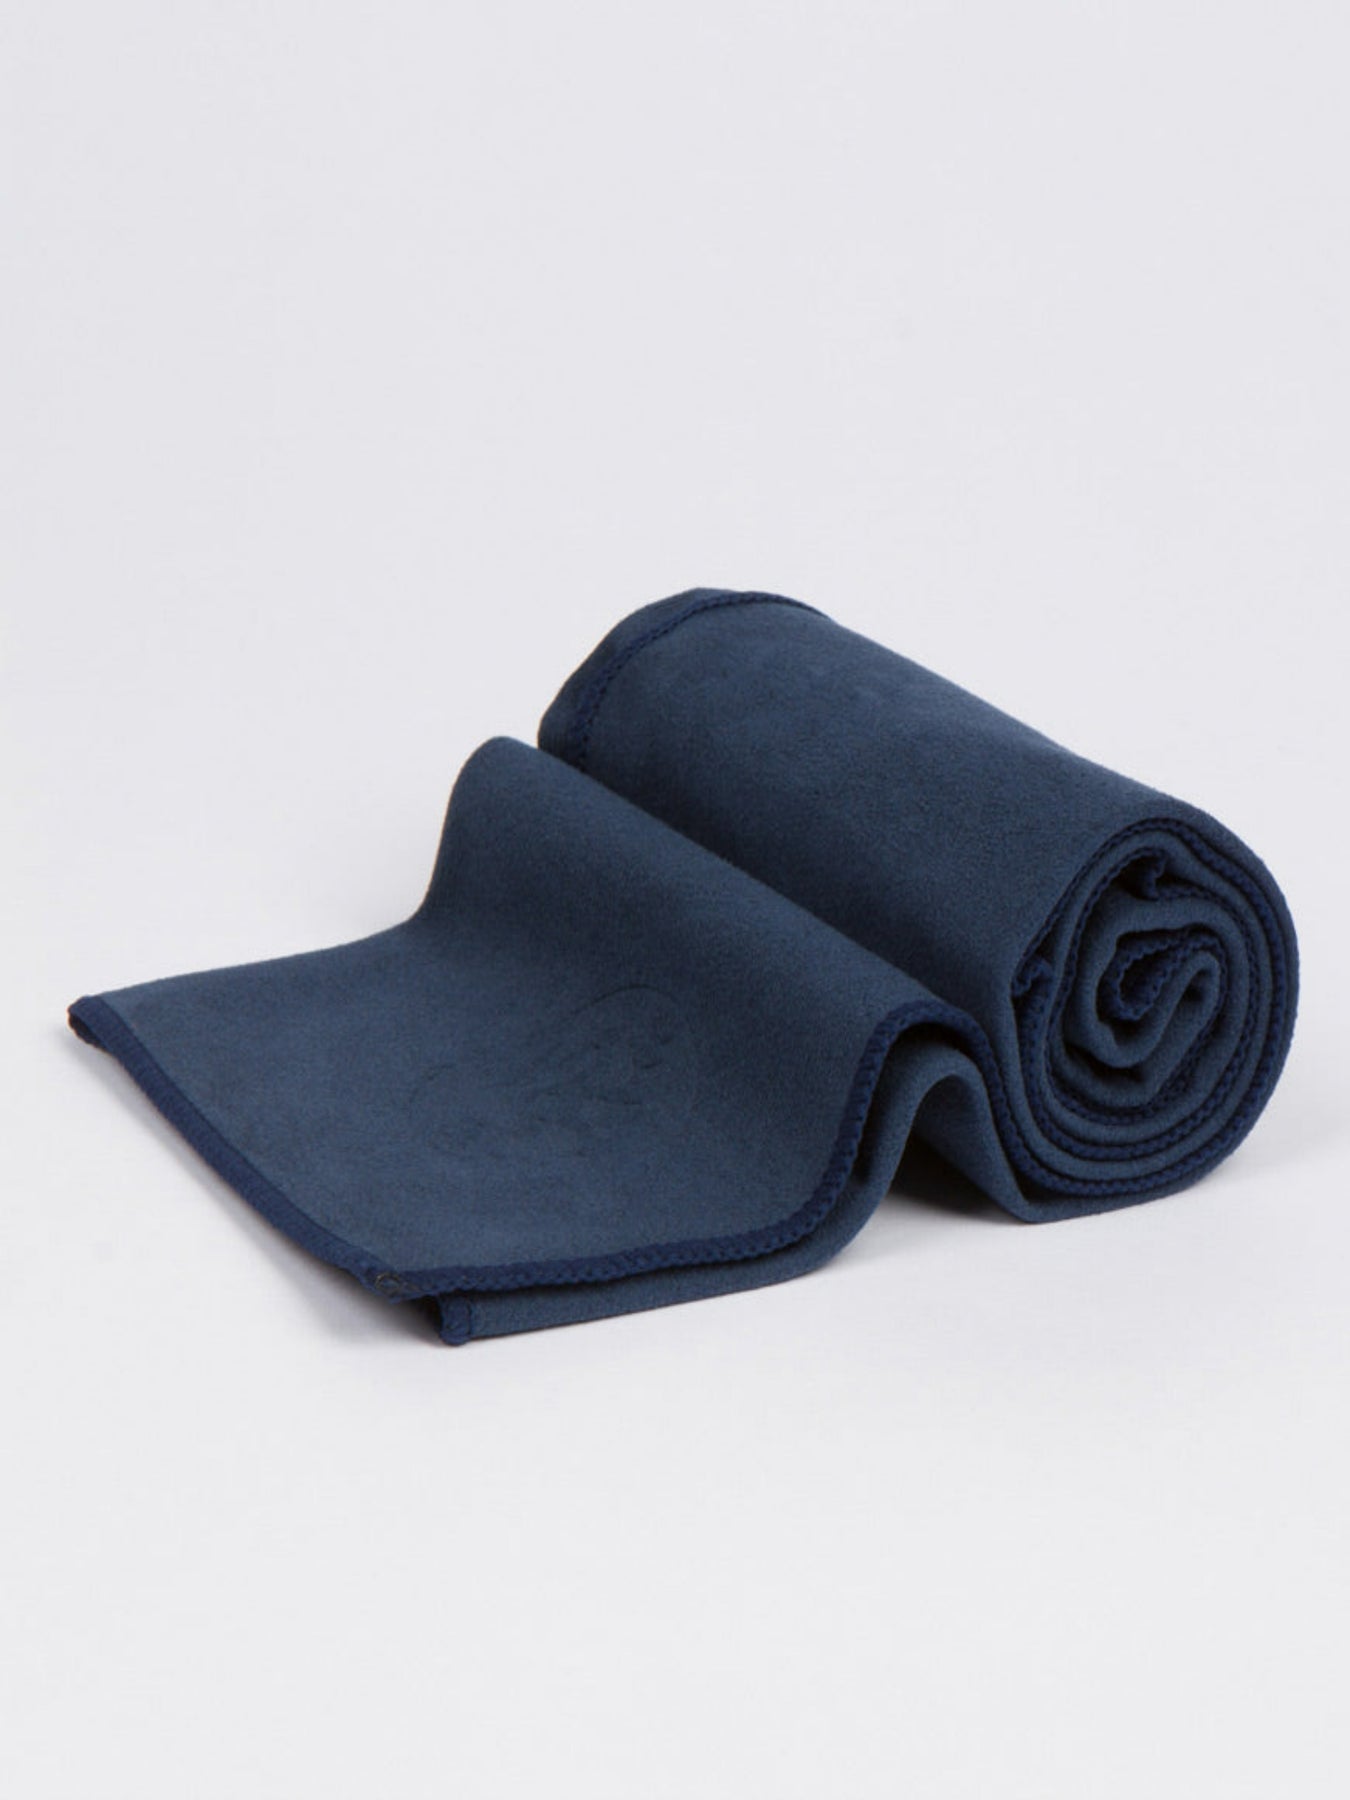 Manduka EQUA® Yoga Hand Towel – CorePower Yoga